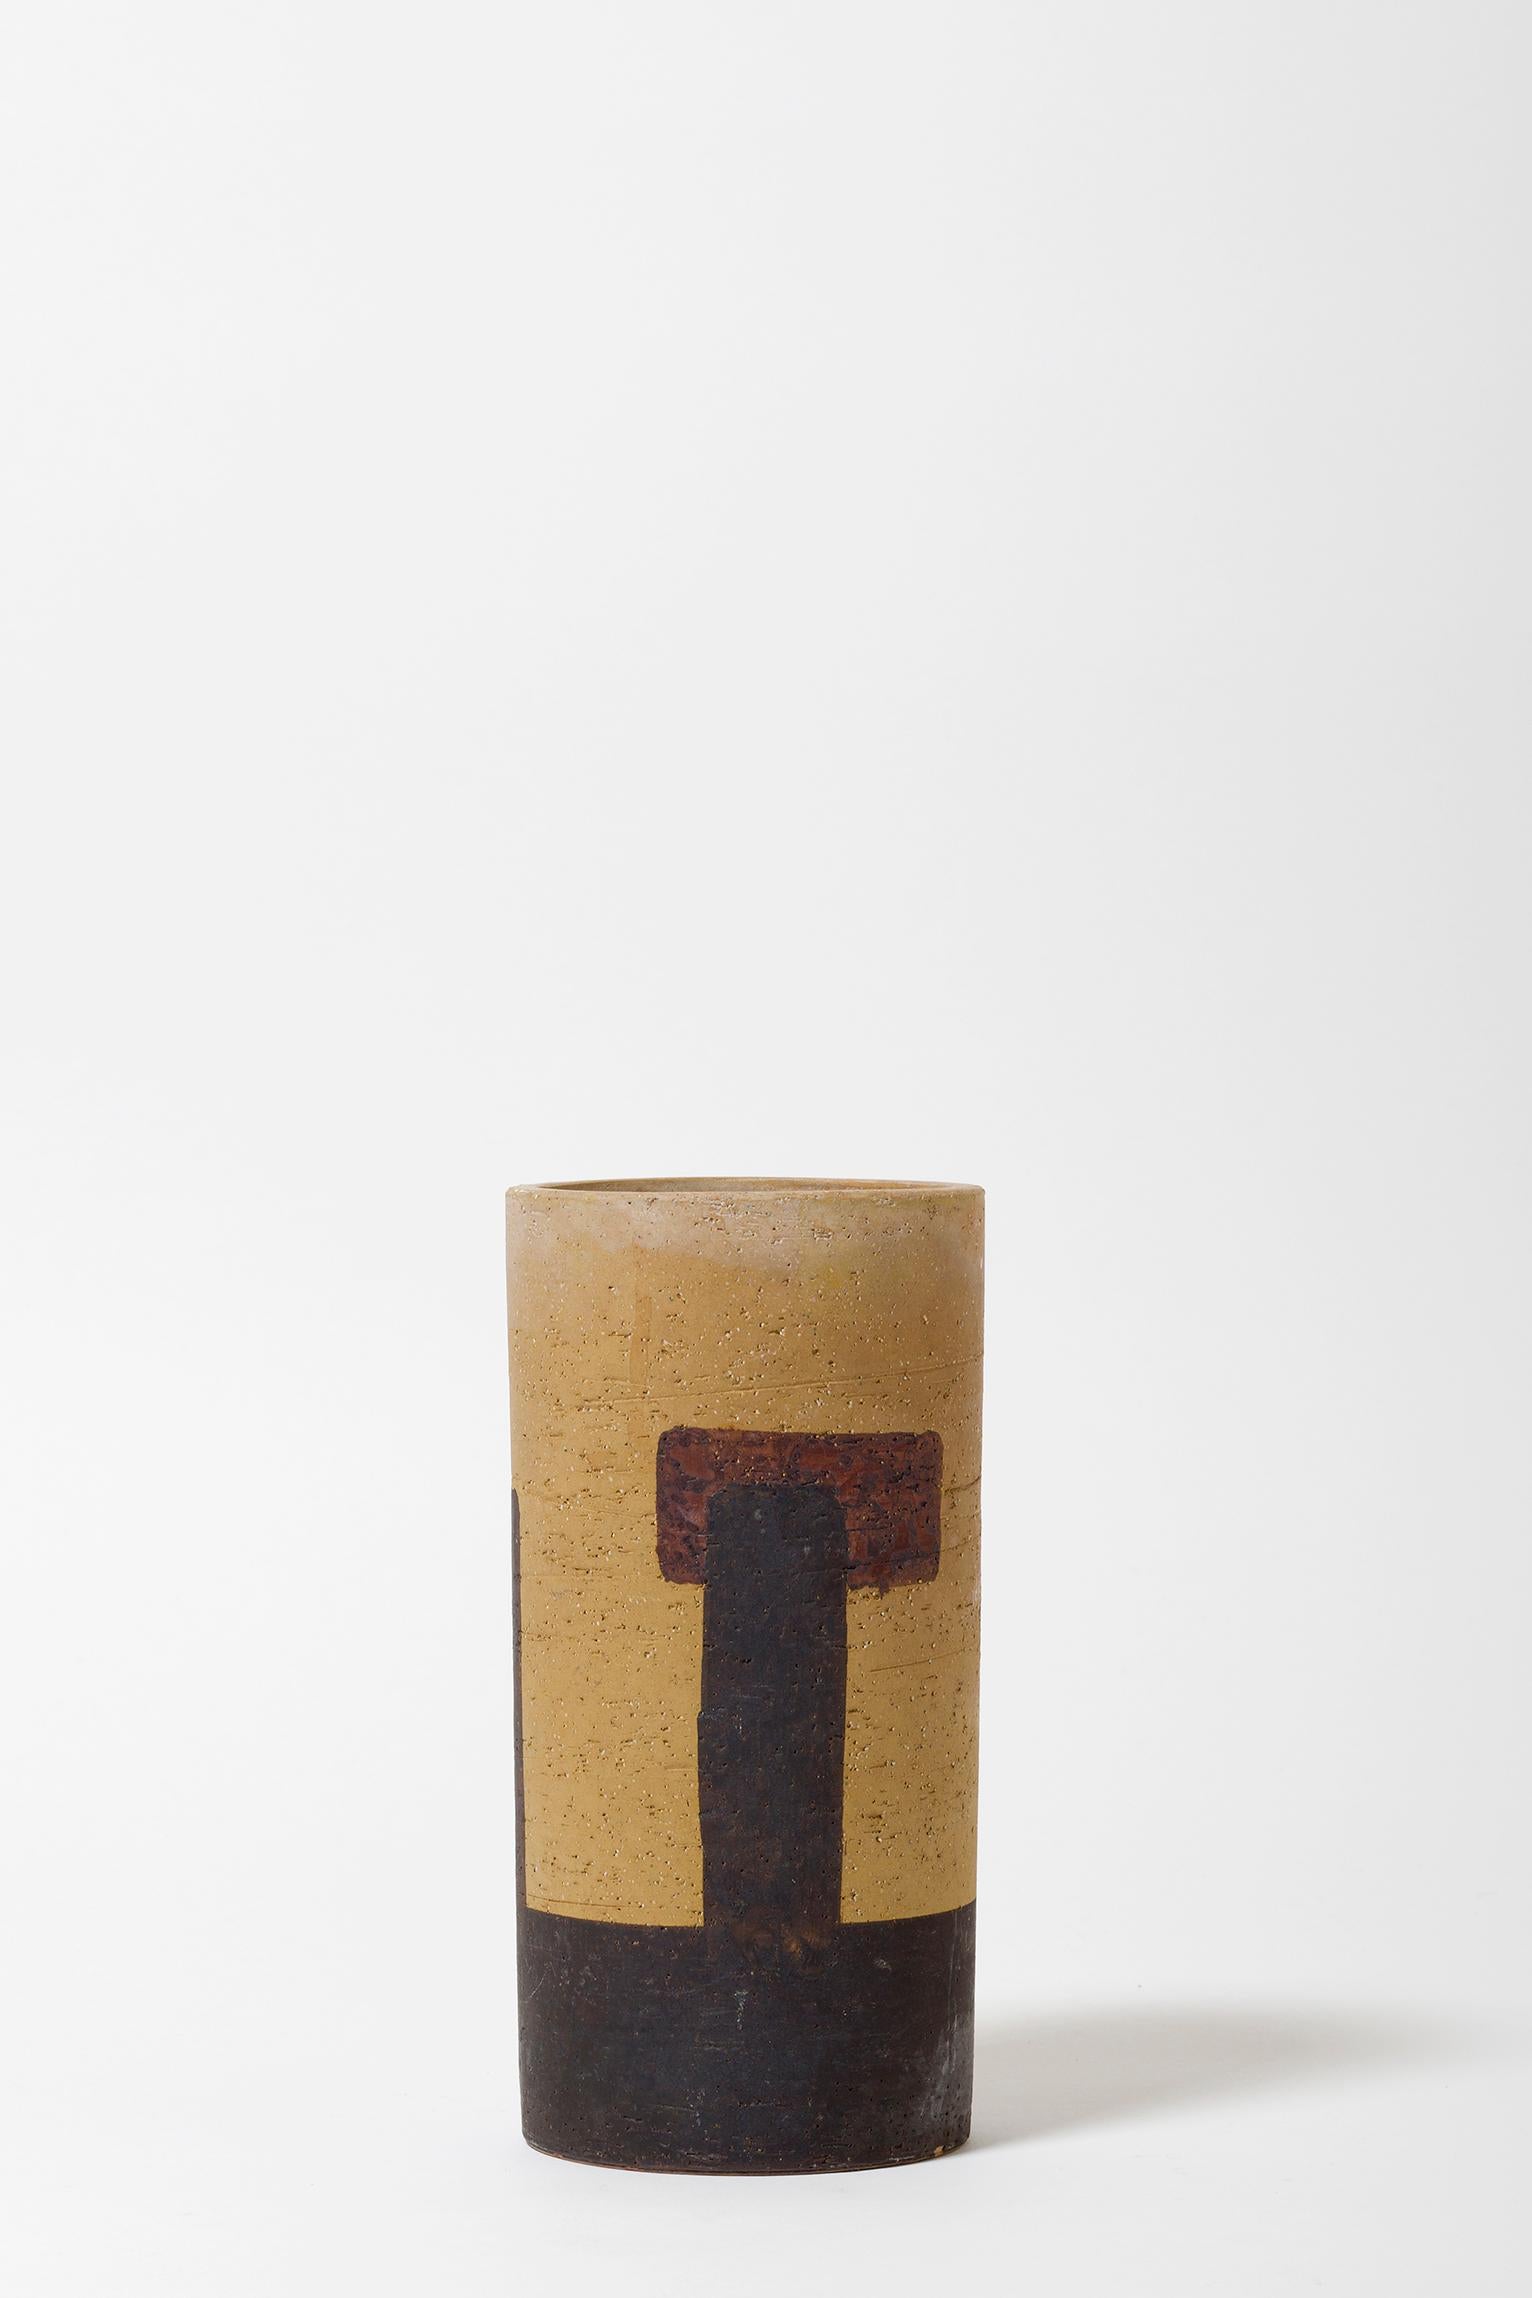 A polychrome ceramic rouleau vase
Spain, circa 1950.